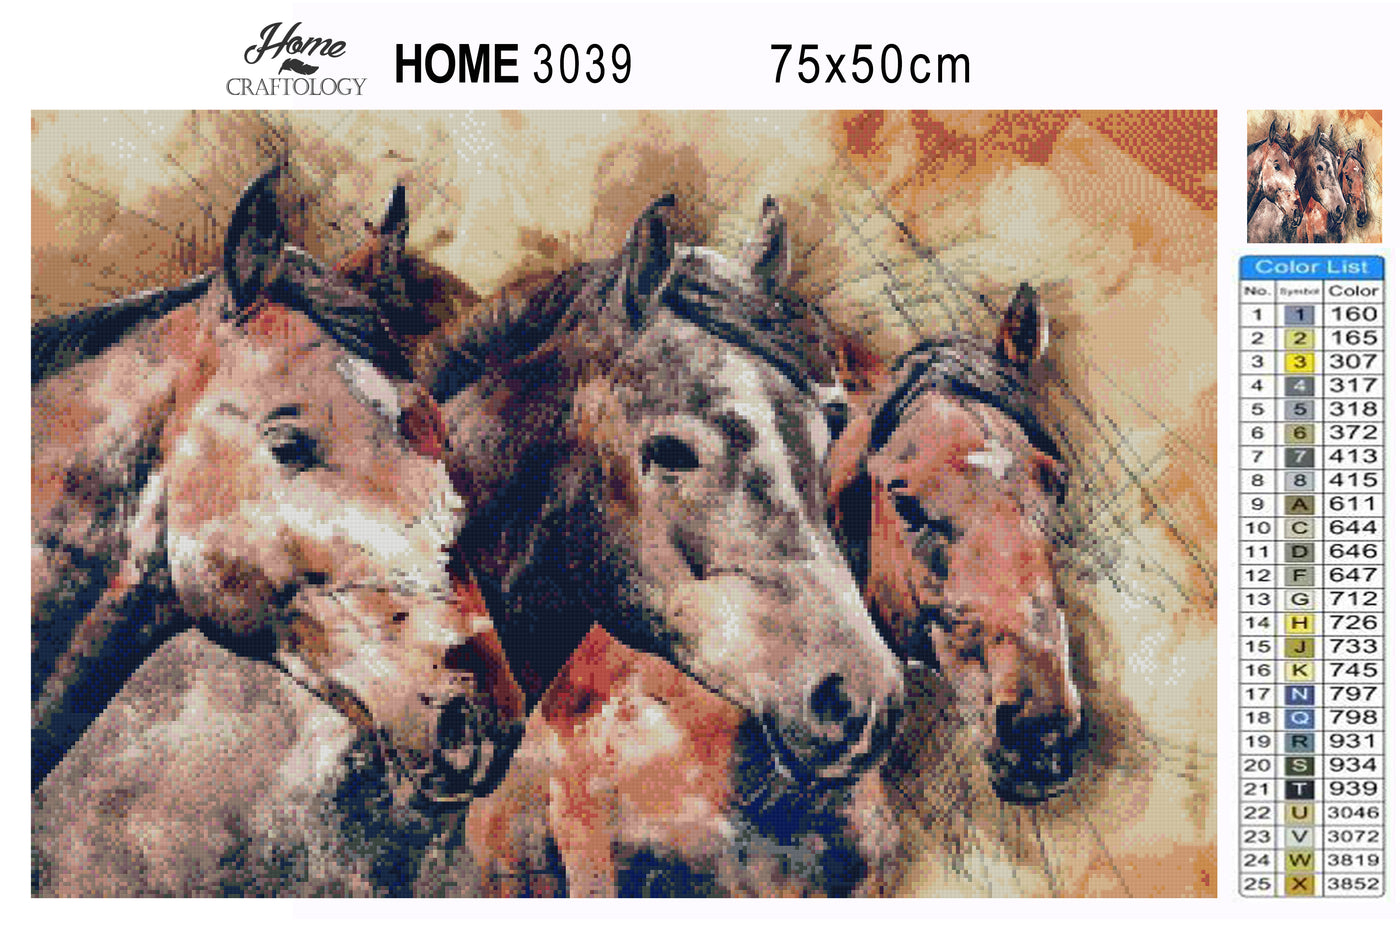 Three Horses Painting - Premium Diamond Painting Kit